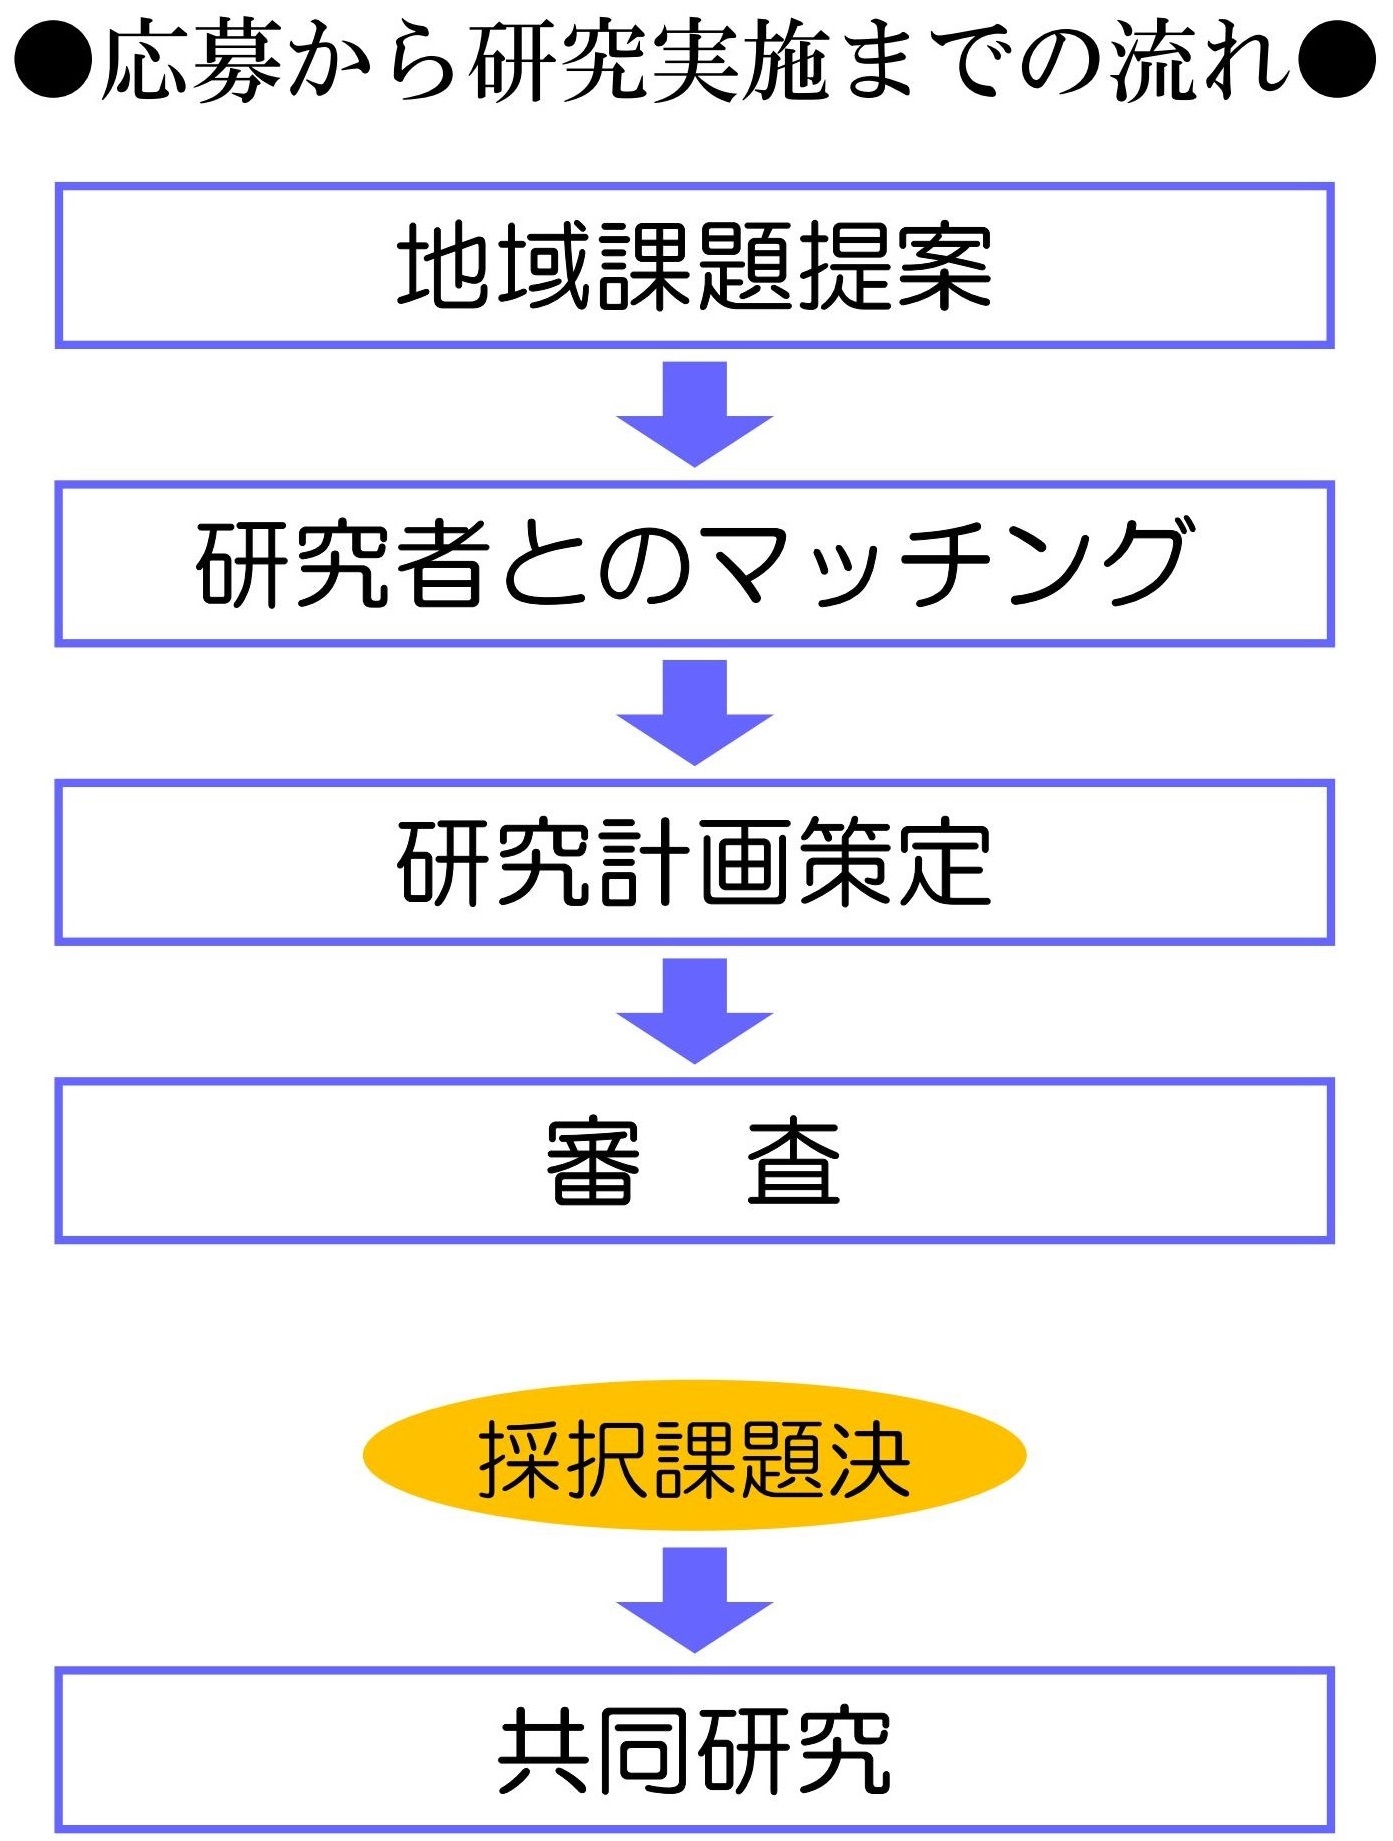 http://www.iwate-pu.ac.jp/contribution/%E5%AF%A9%E6%9F%BB%E3%81%AE%E6%B5%81%E3%82%8C.jpg